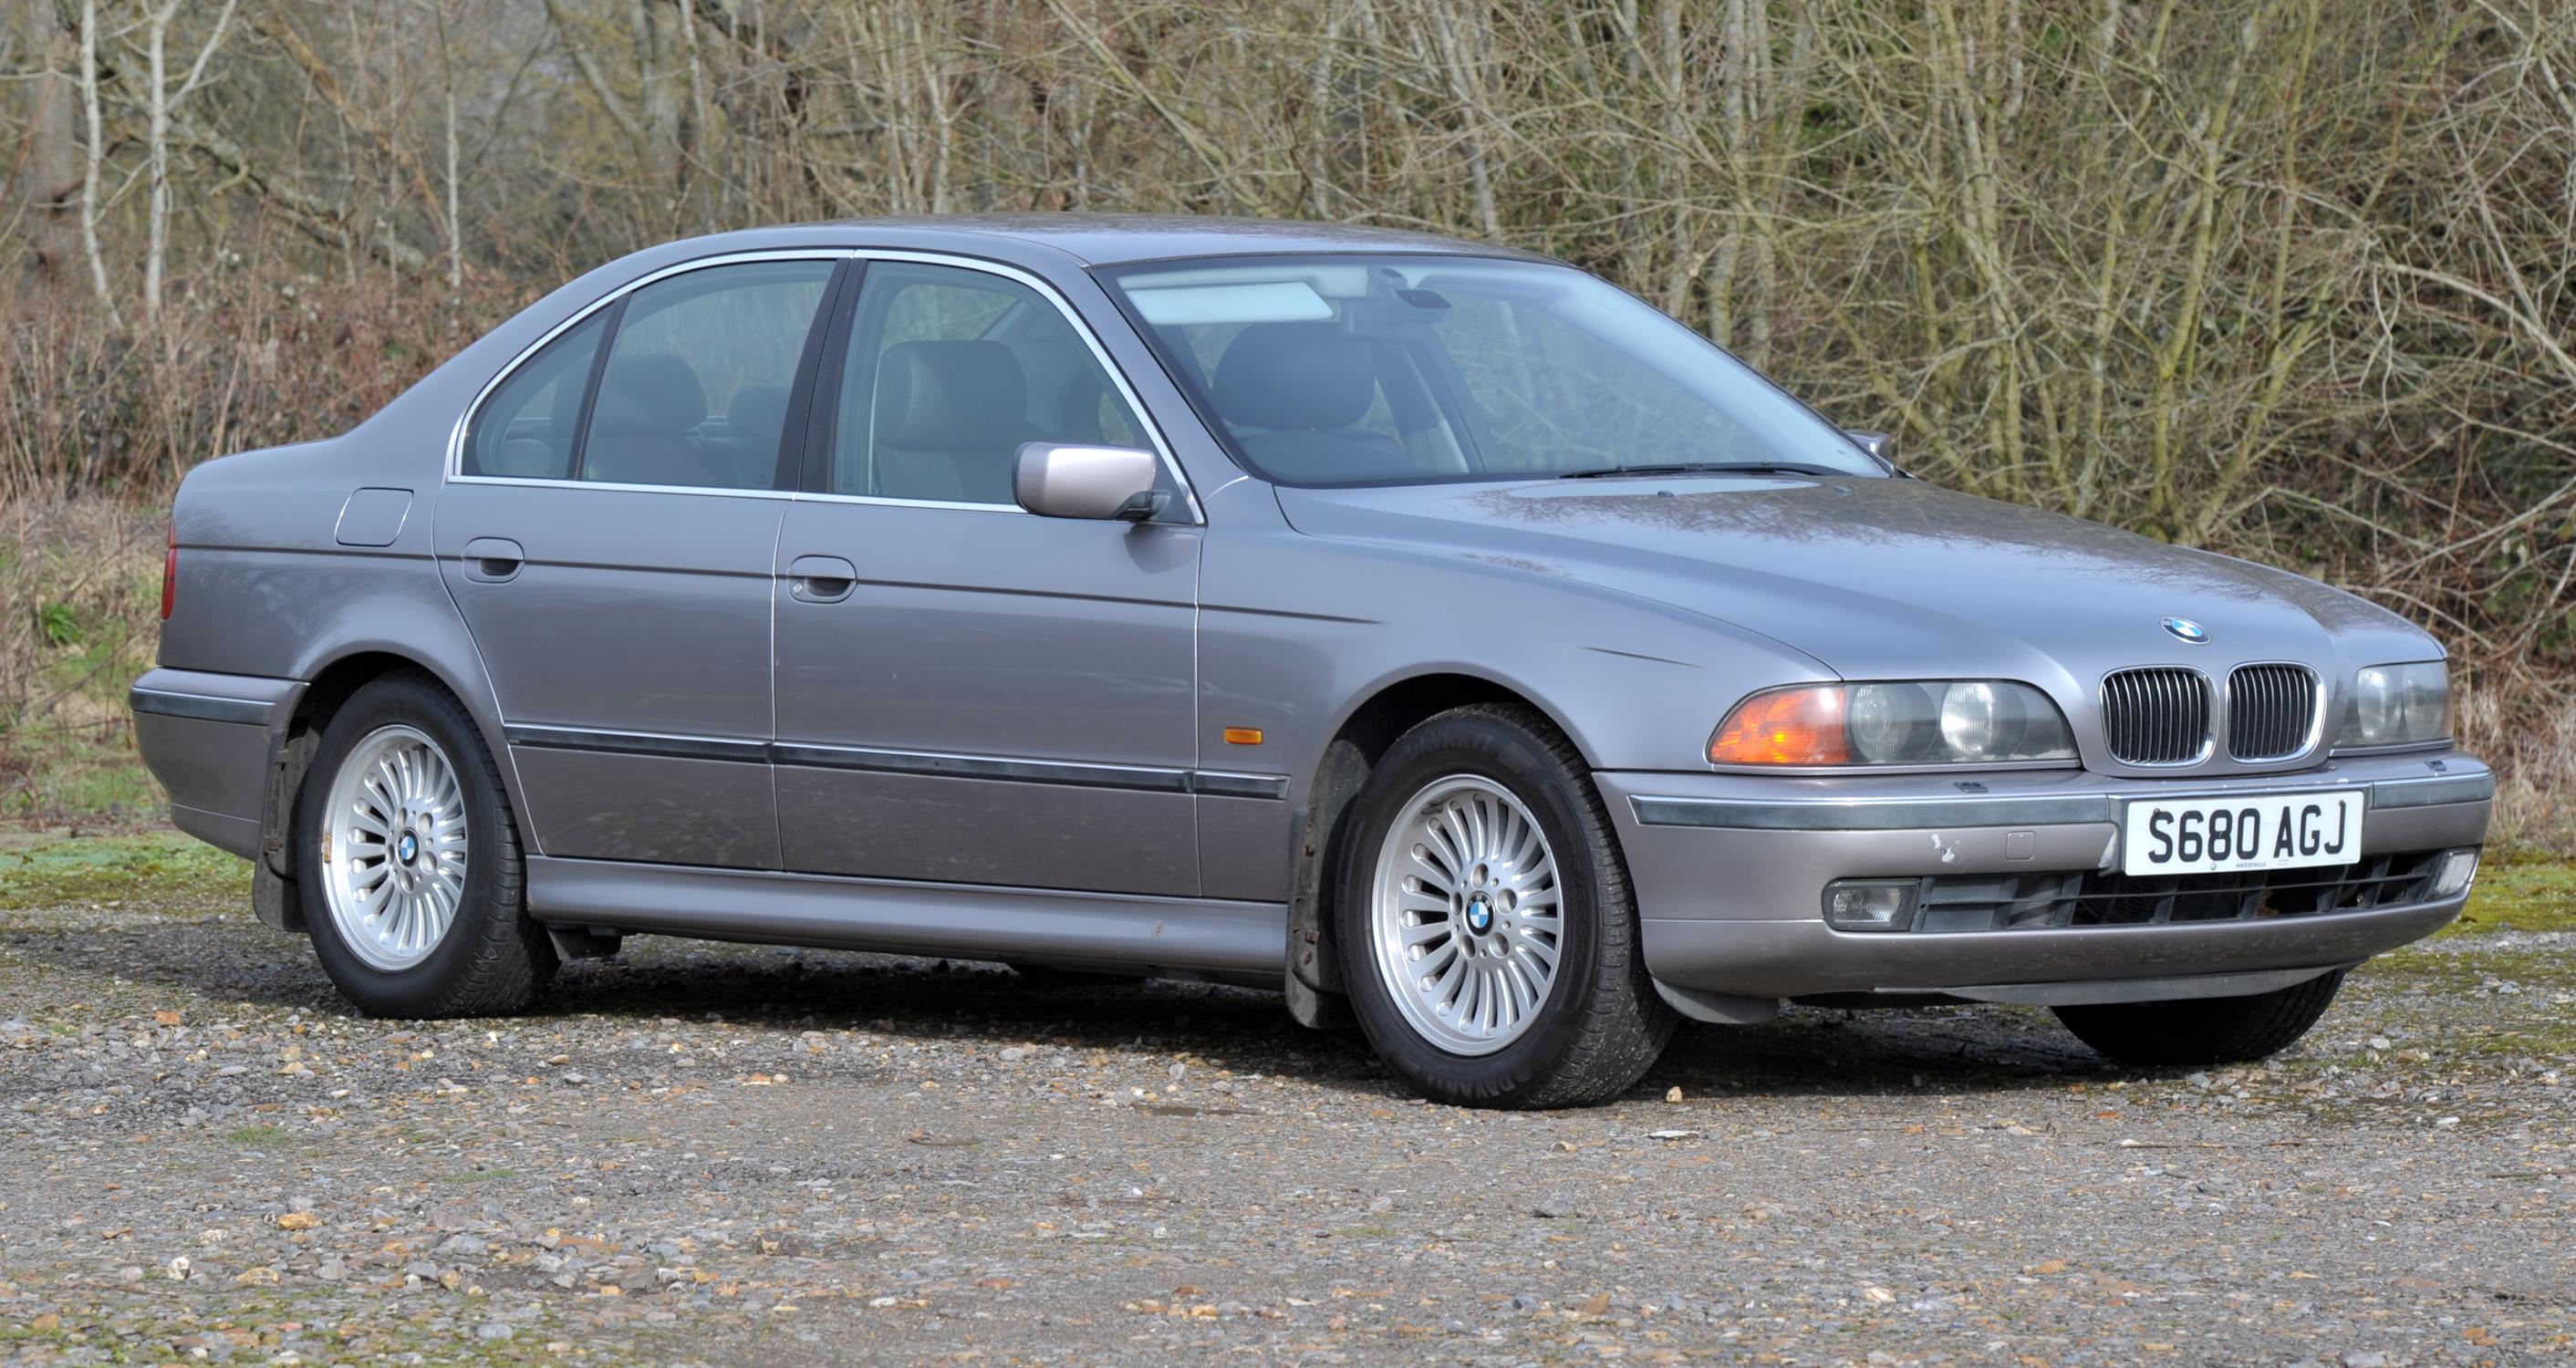 1998 BMW 535i SE Petrol Automatic saloon. Registration number: S680 AGJ. Mileage: 95,